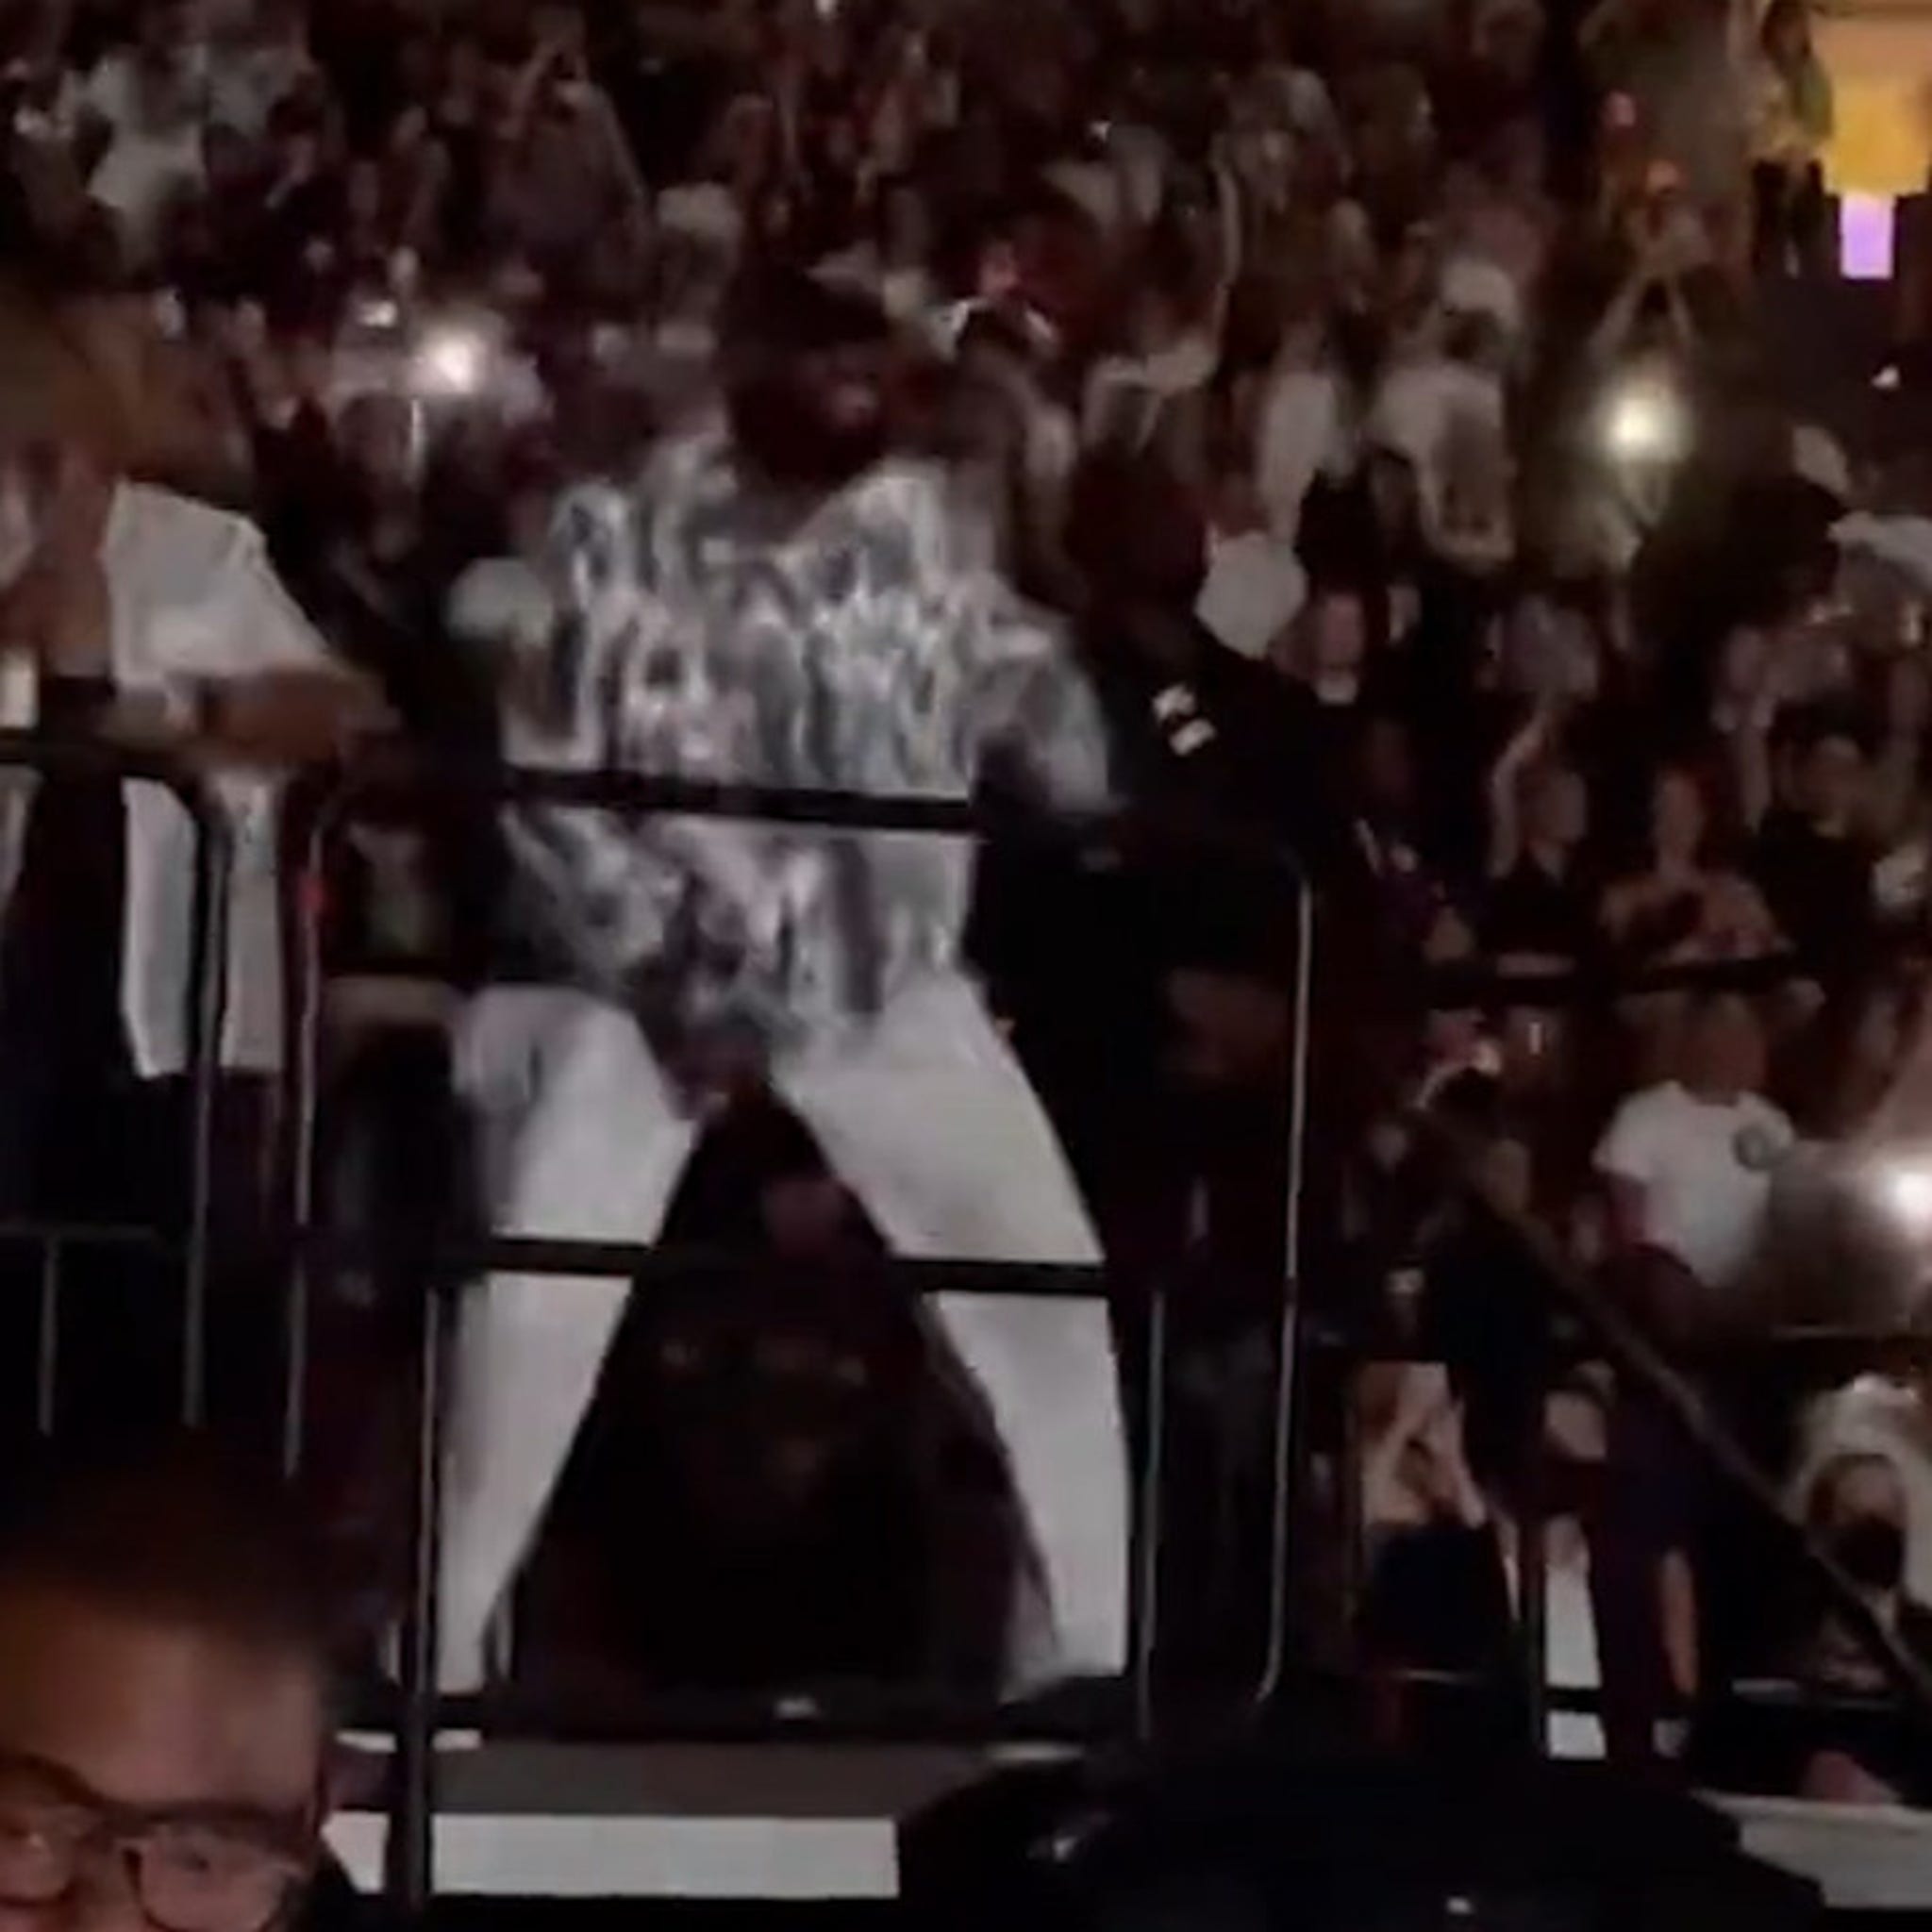 Watch LeBron James geek out to Kendrick Lamar in an utterly lifeless crowd